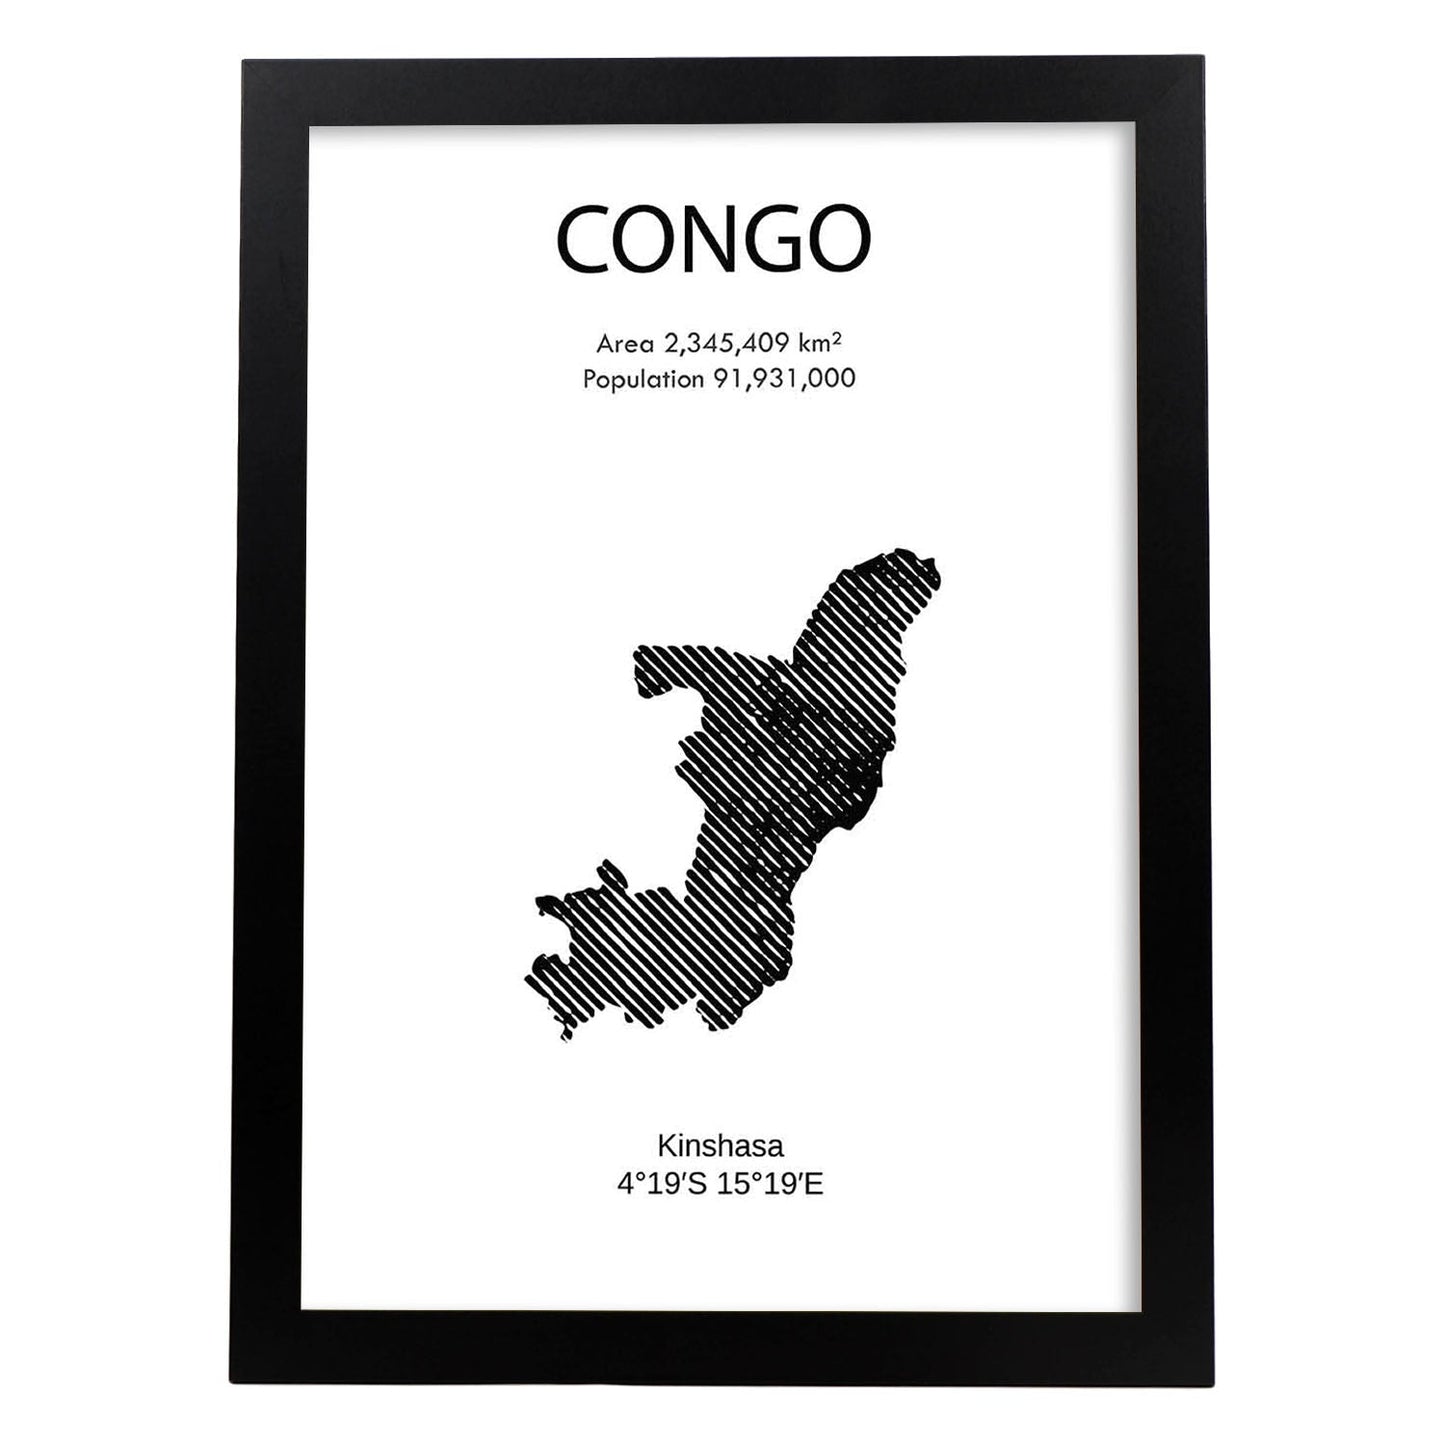 Poster de Congo. Láminas de paises y continentes del mundo.-Artwork-Nacnic-A4-Marco Negro-Nacnic Estudio SL